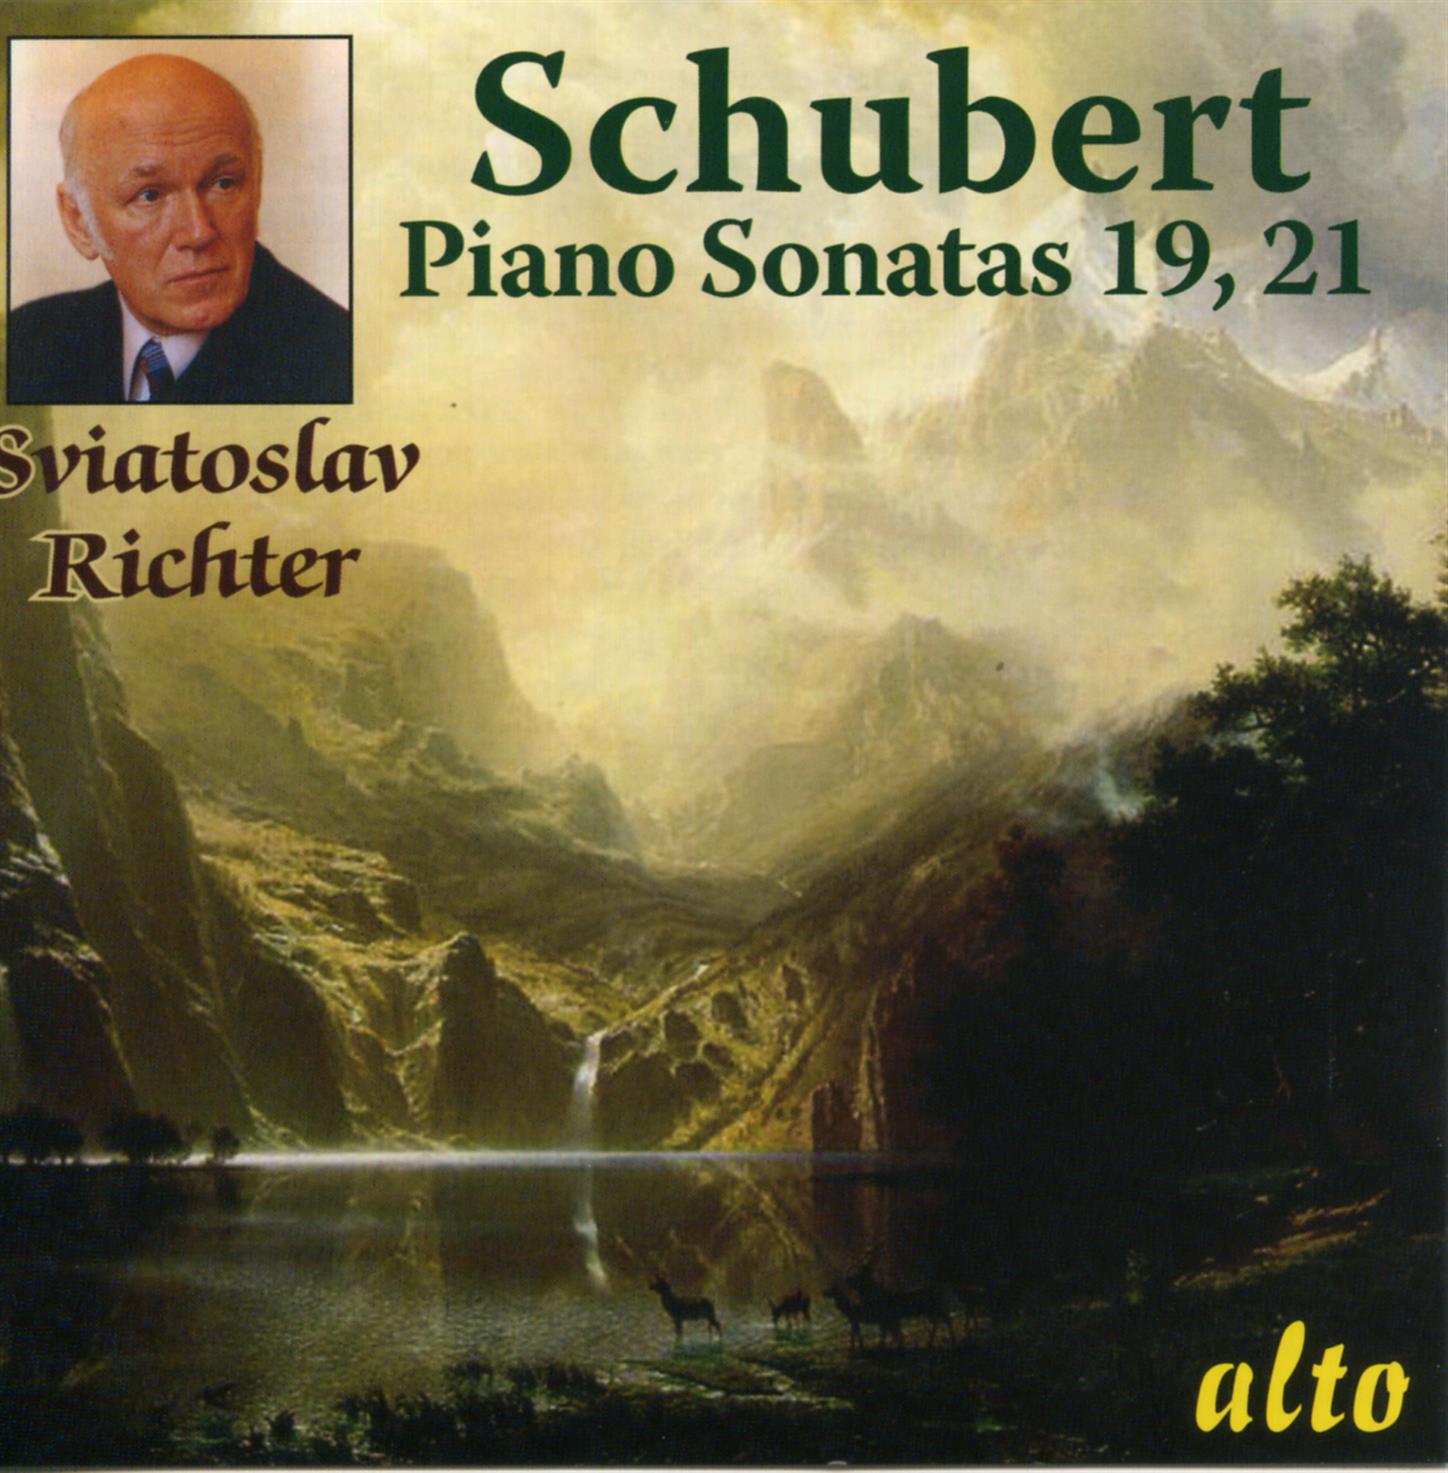 Piano Sonata No. 19 in C minor, Op.posth. (D958): III. Menuetto, Allegro